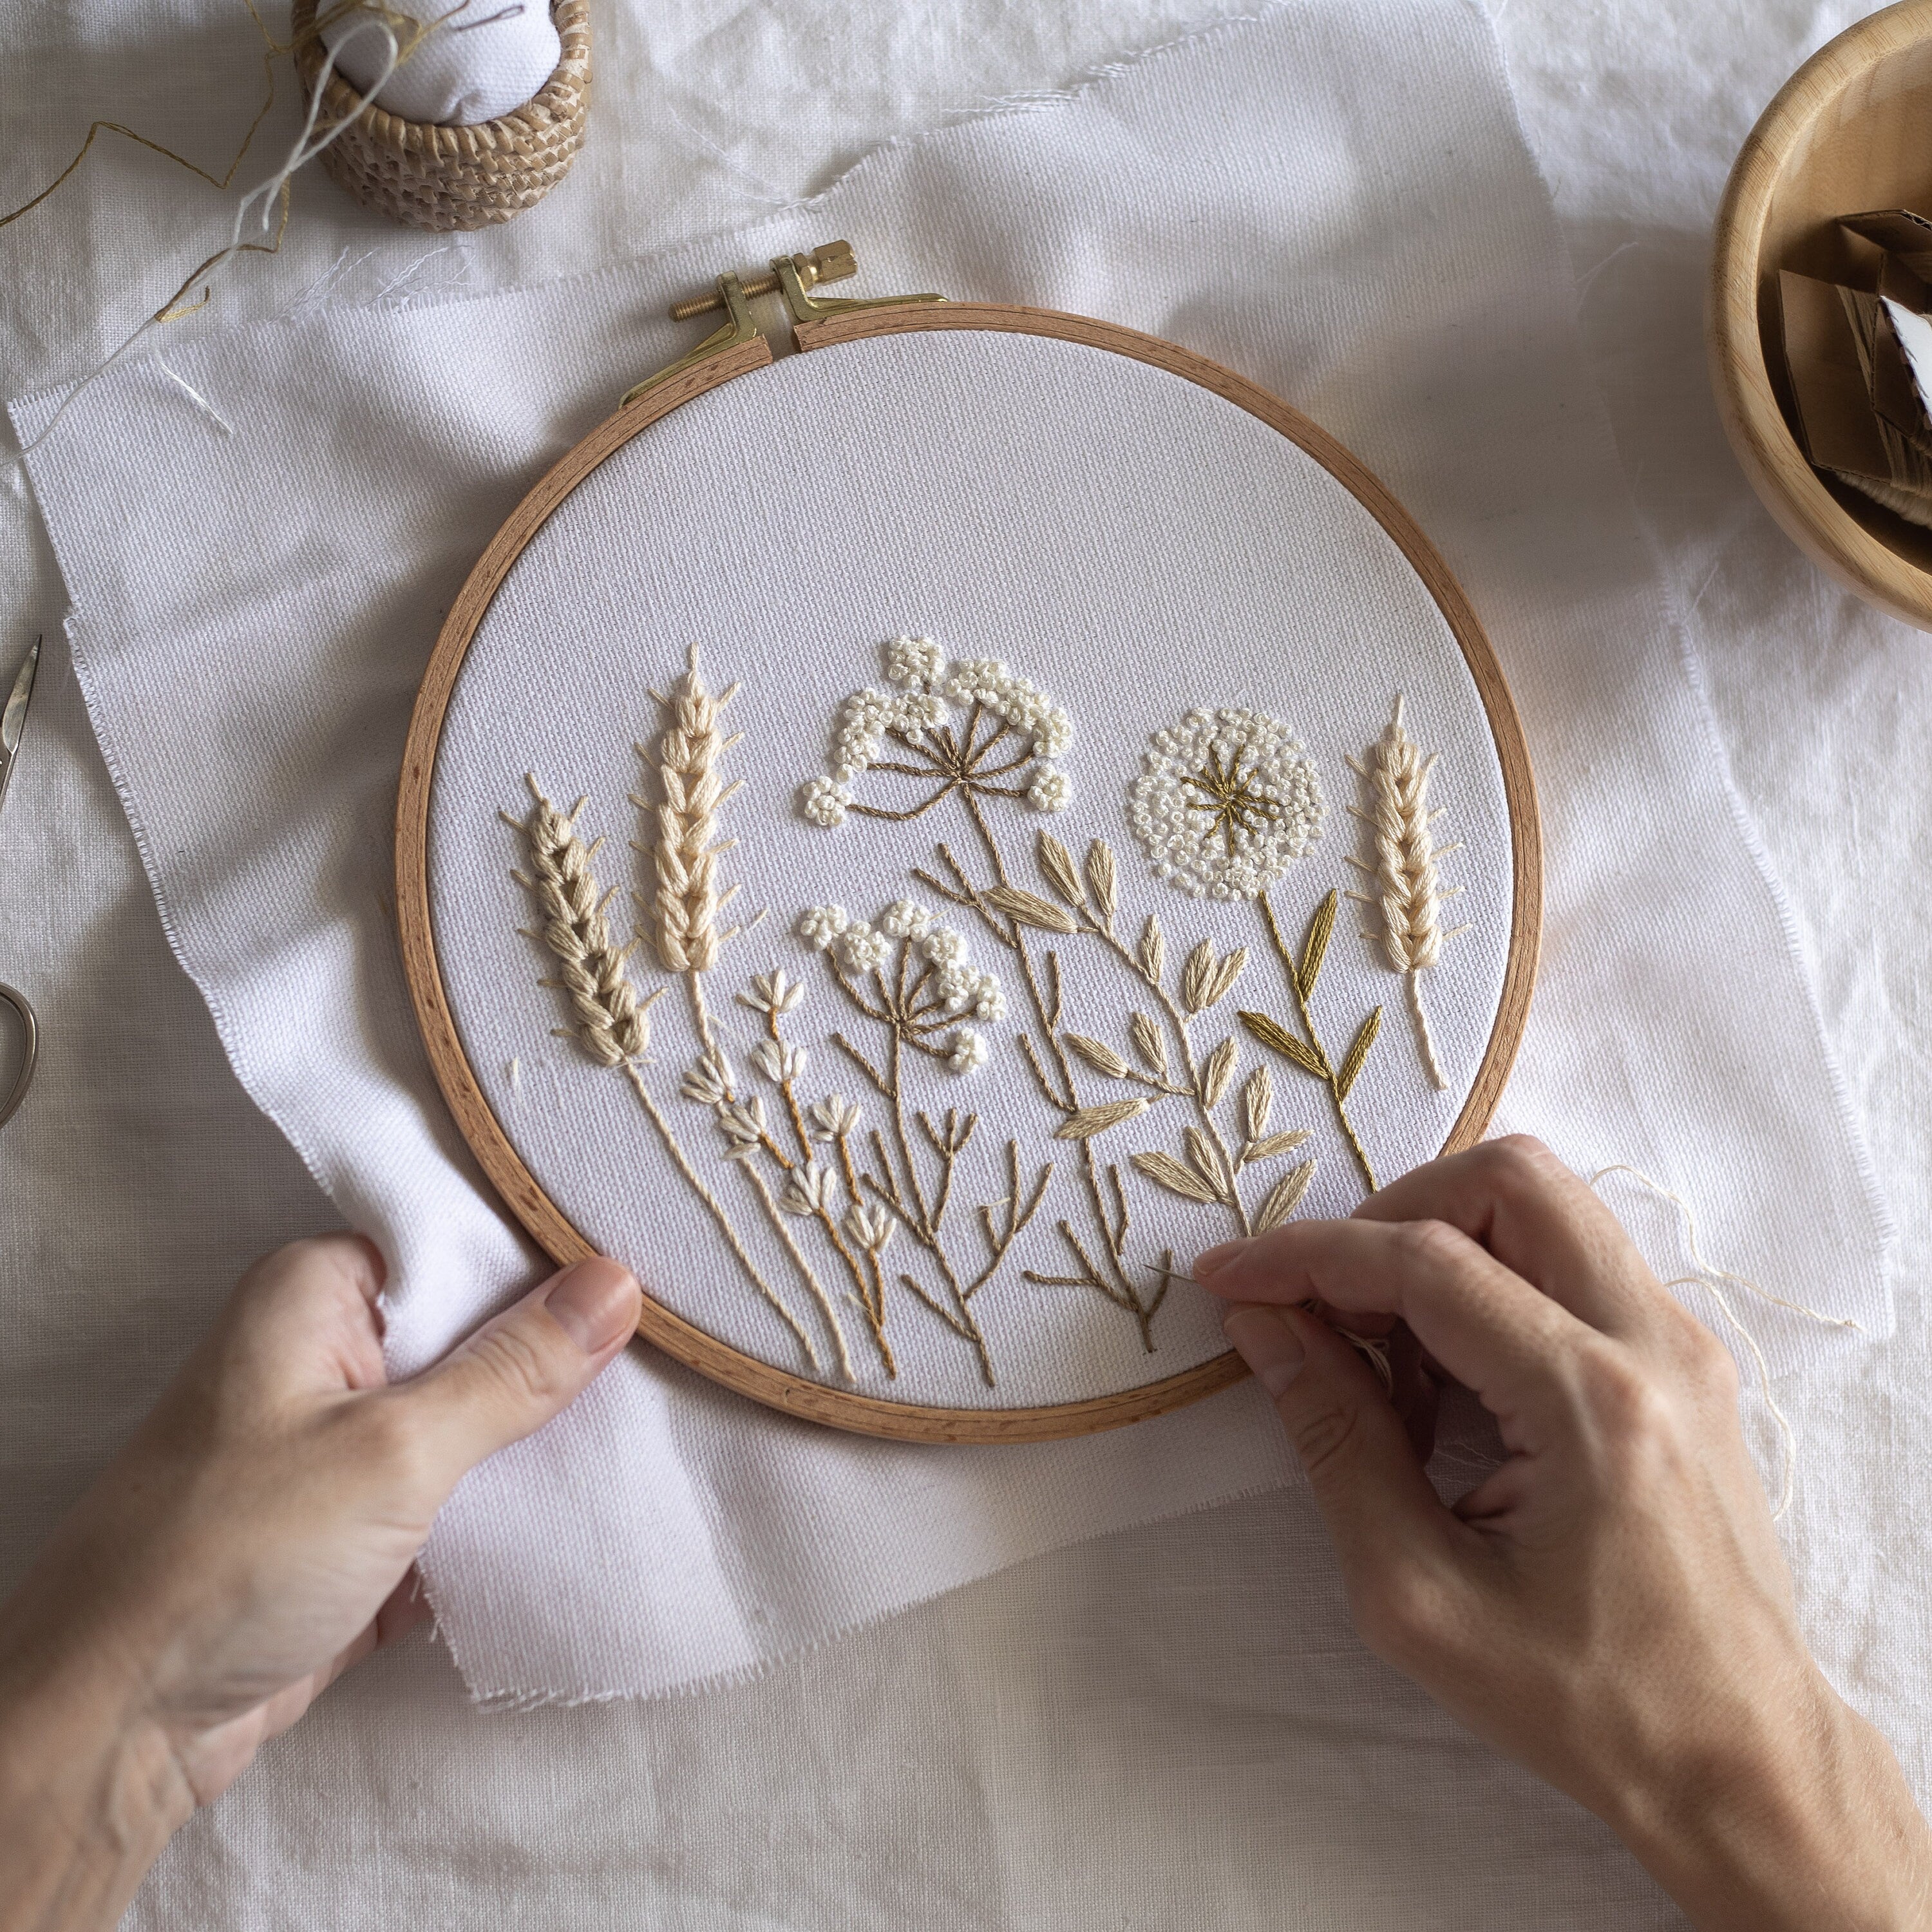 Botanical embroidery patterns, set of 5